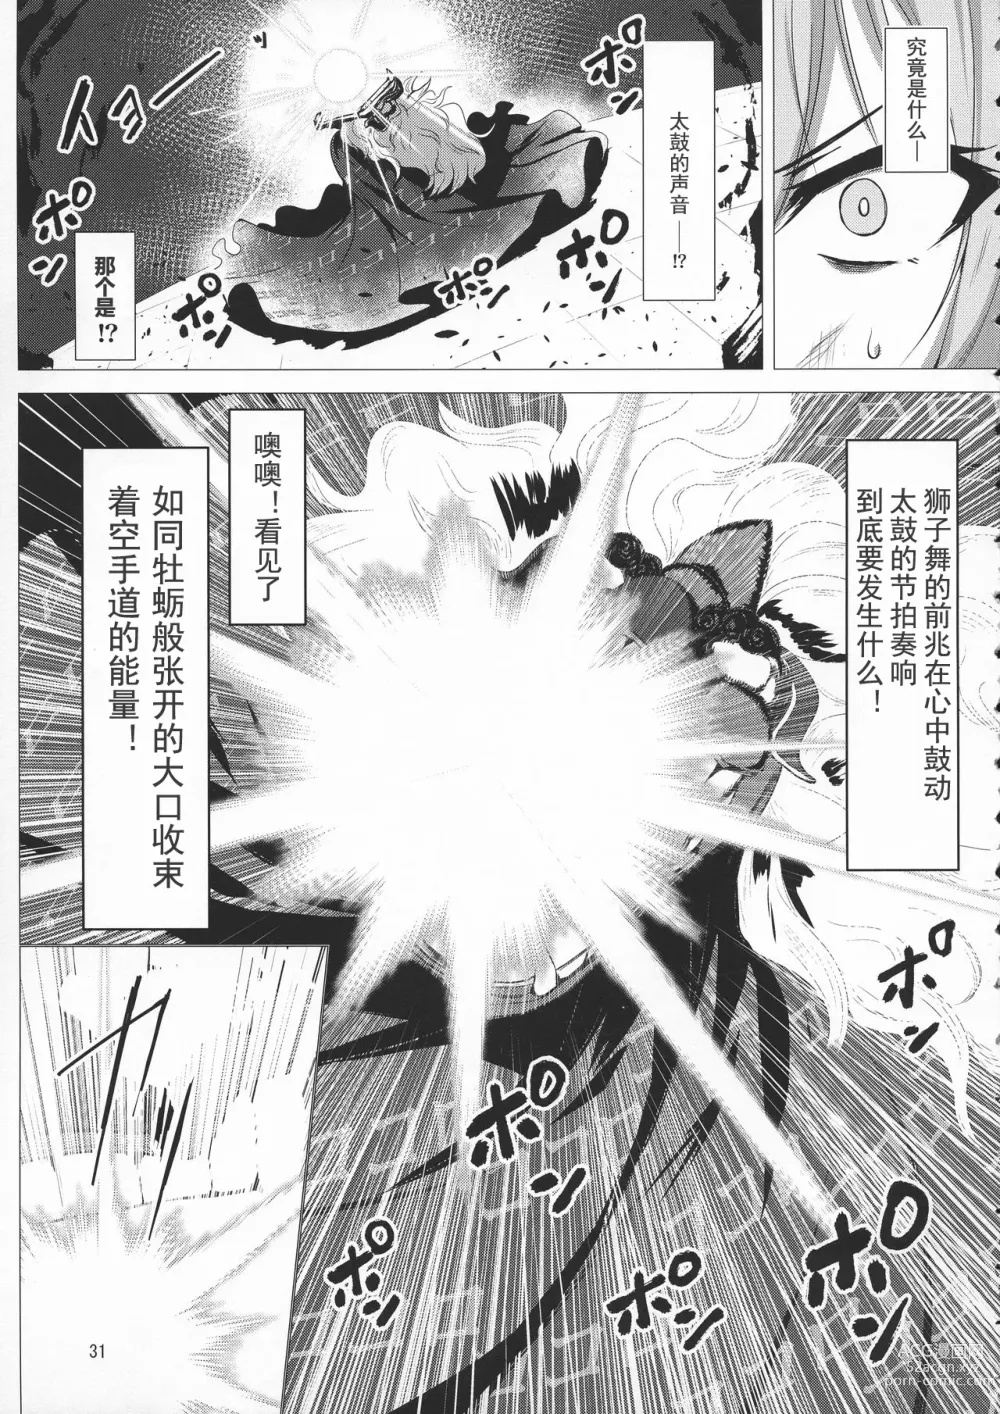 Page 31 of doujinshi Taimanin Satori 4